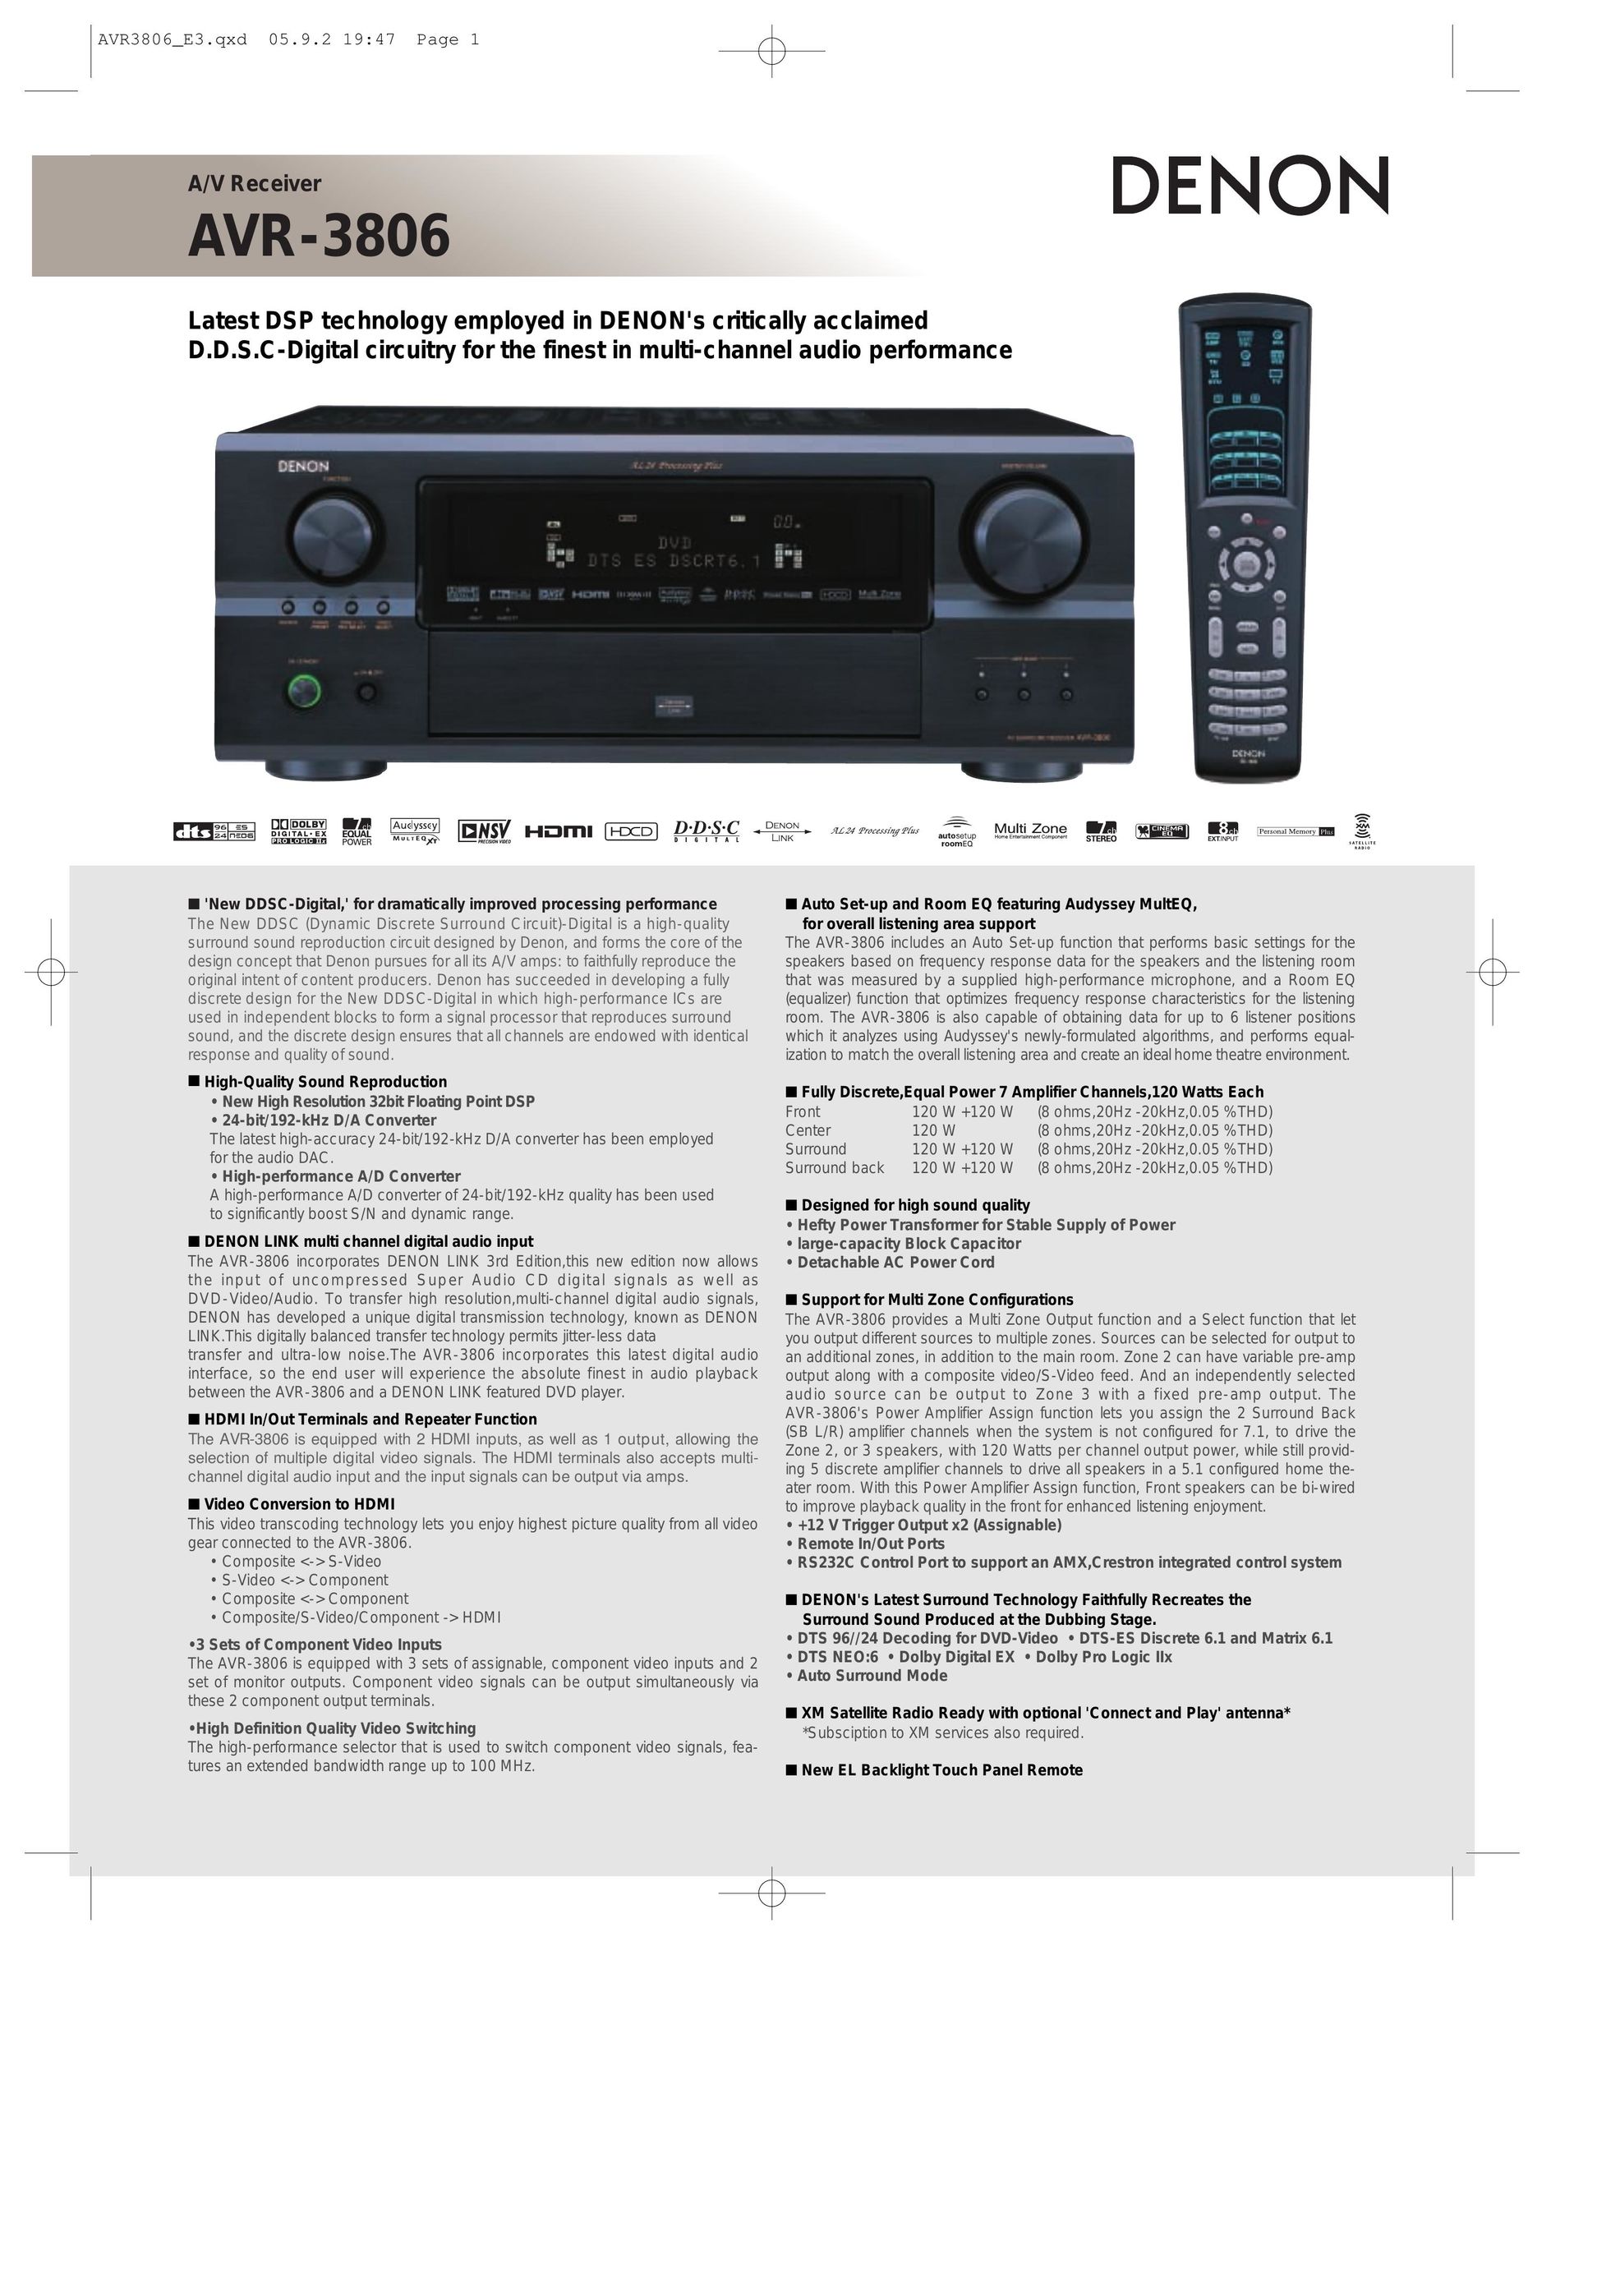 Denon AVR-3806 Stereo Receiver User Manual